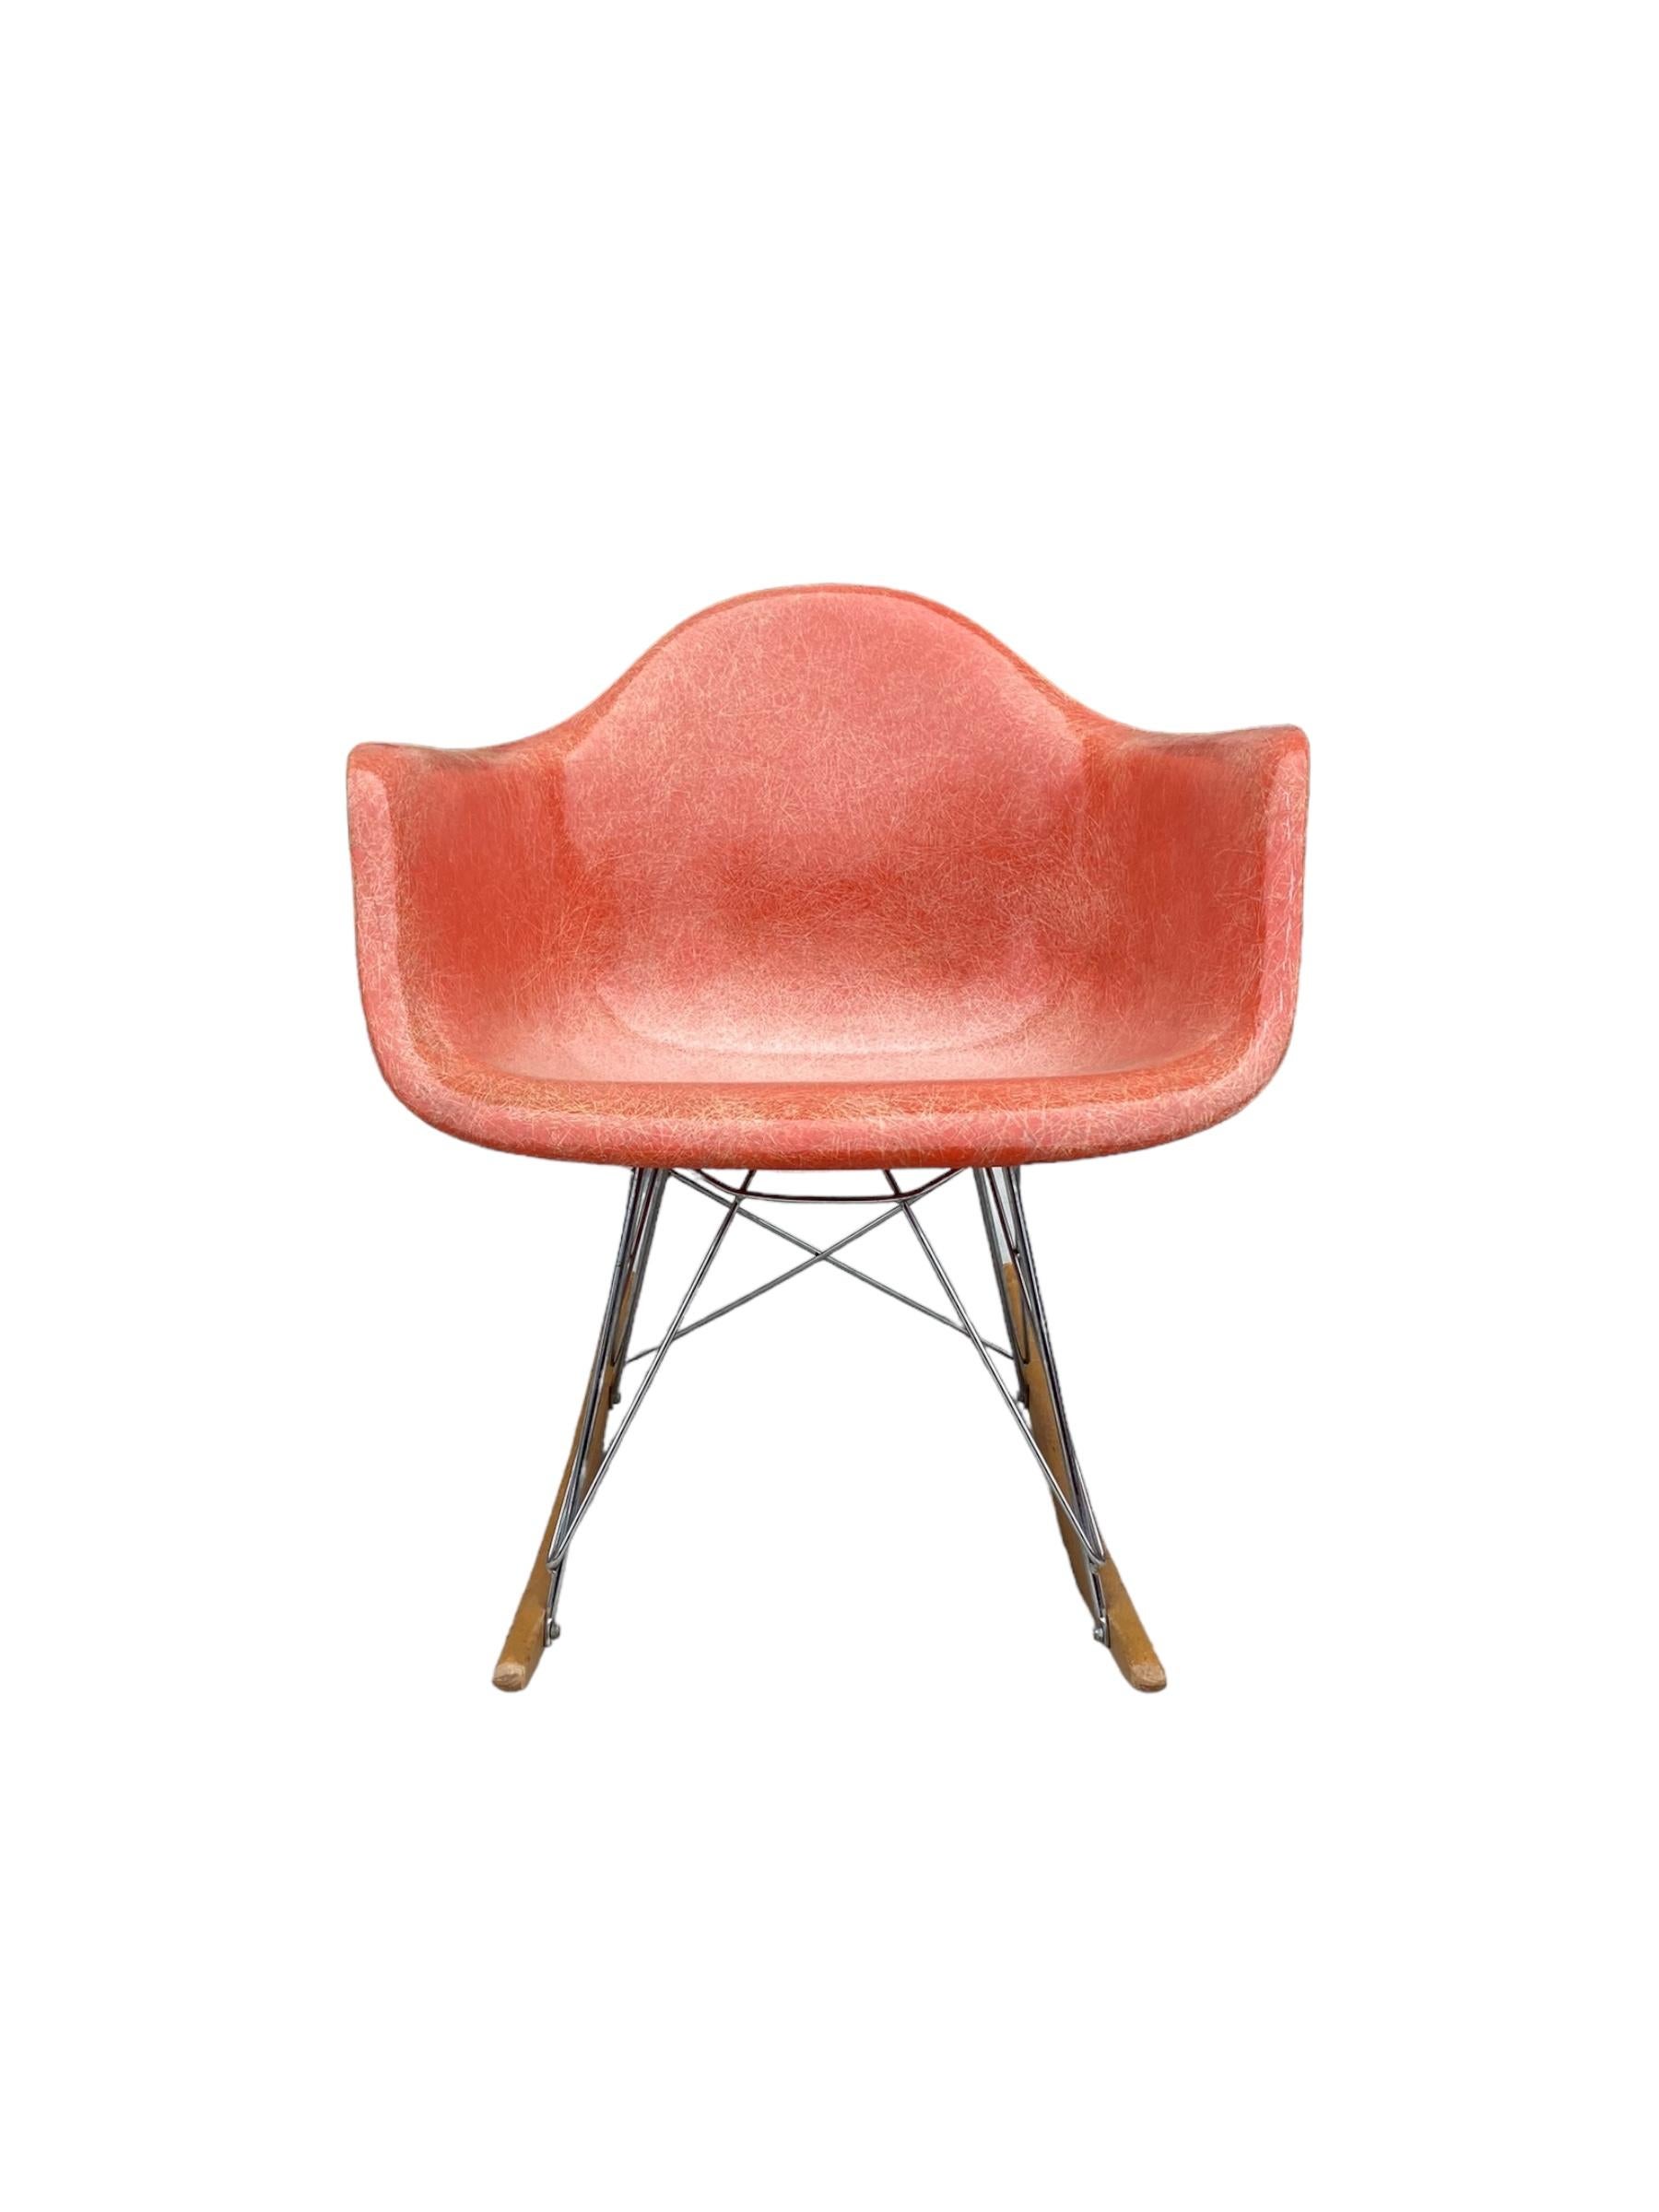 American Herman Miller Eames RAR Rocking Chair in Red Orange For Sale